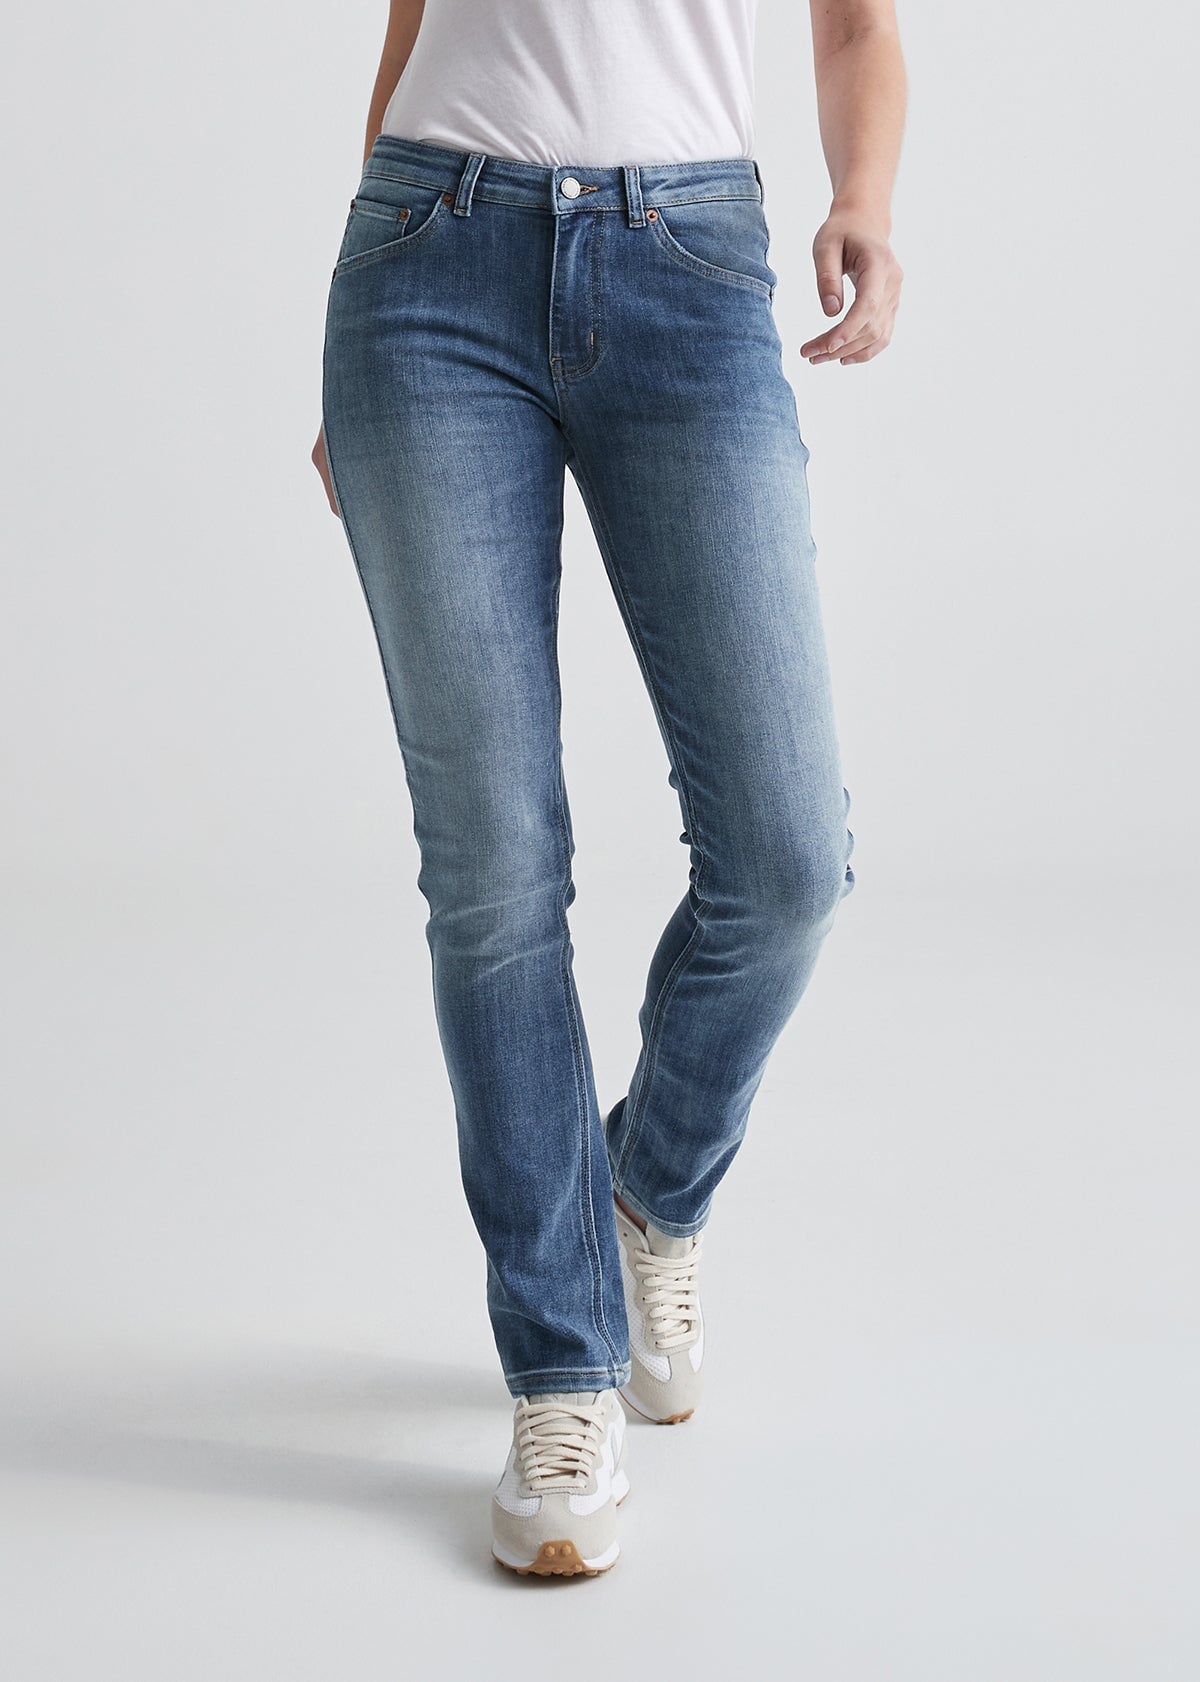 Women's Stretch Jeans - Performance Denim by DUER – Tagged waist-xl